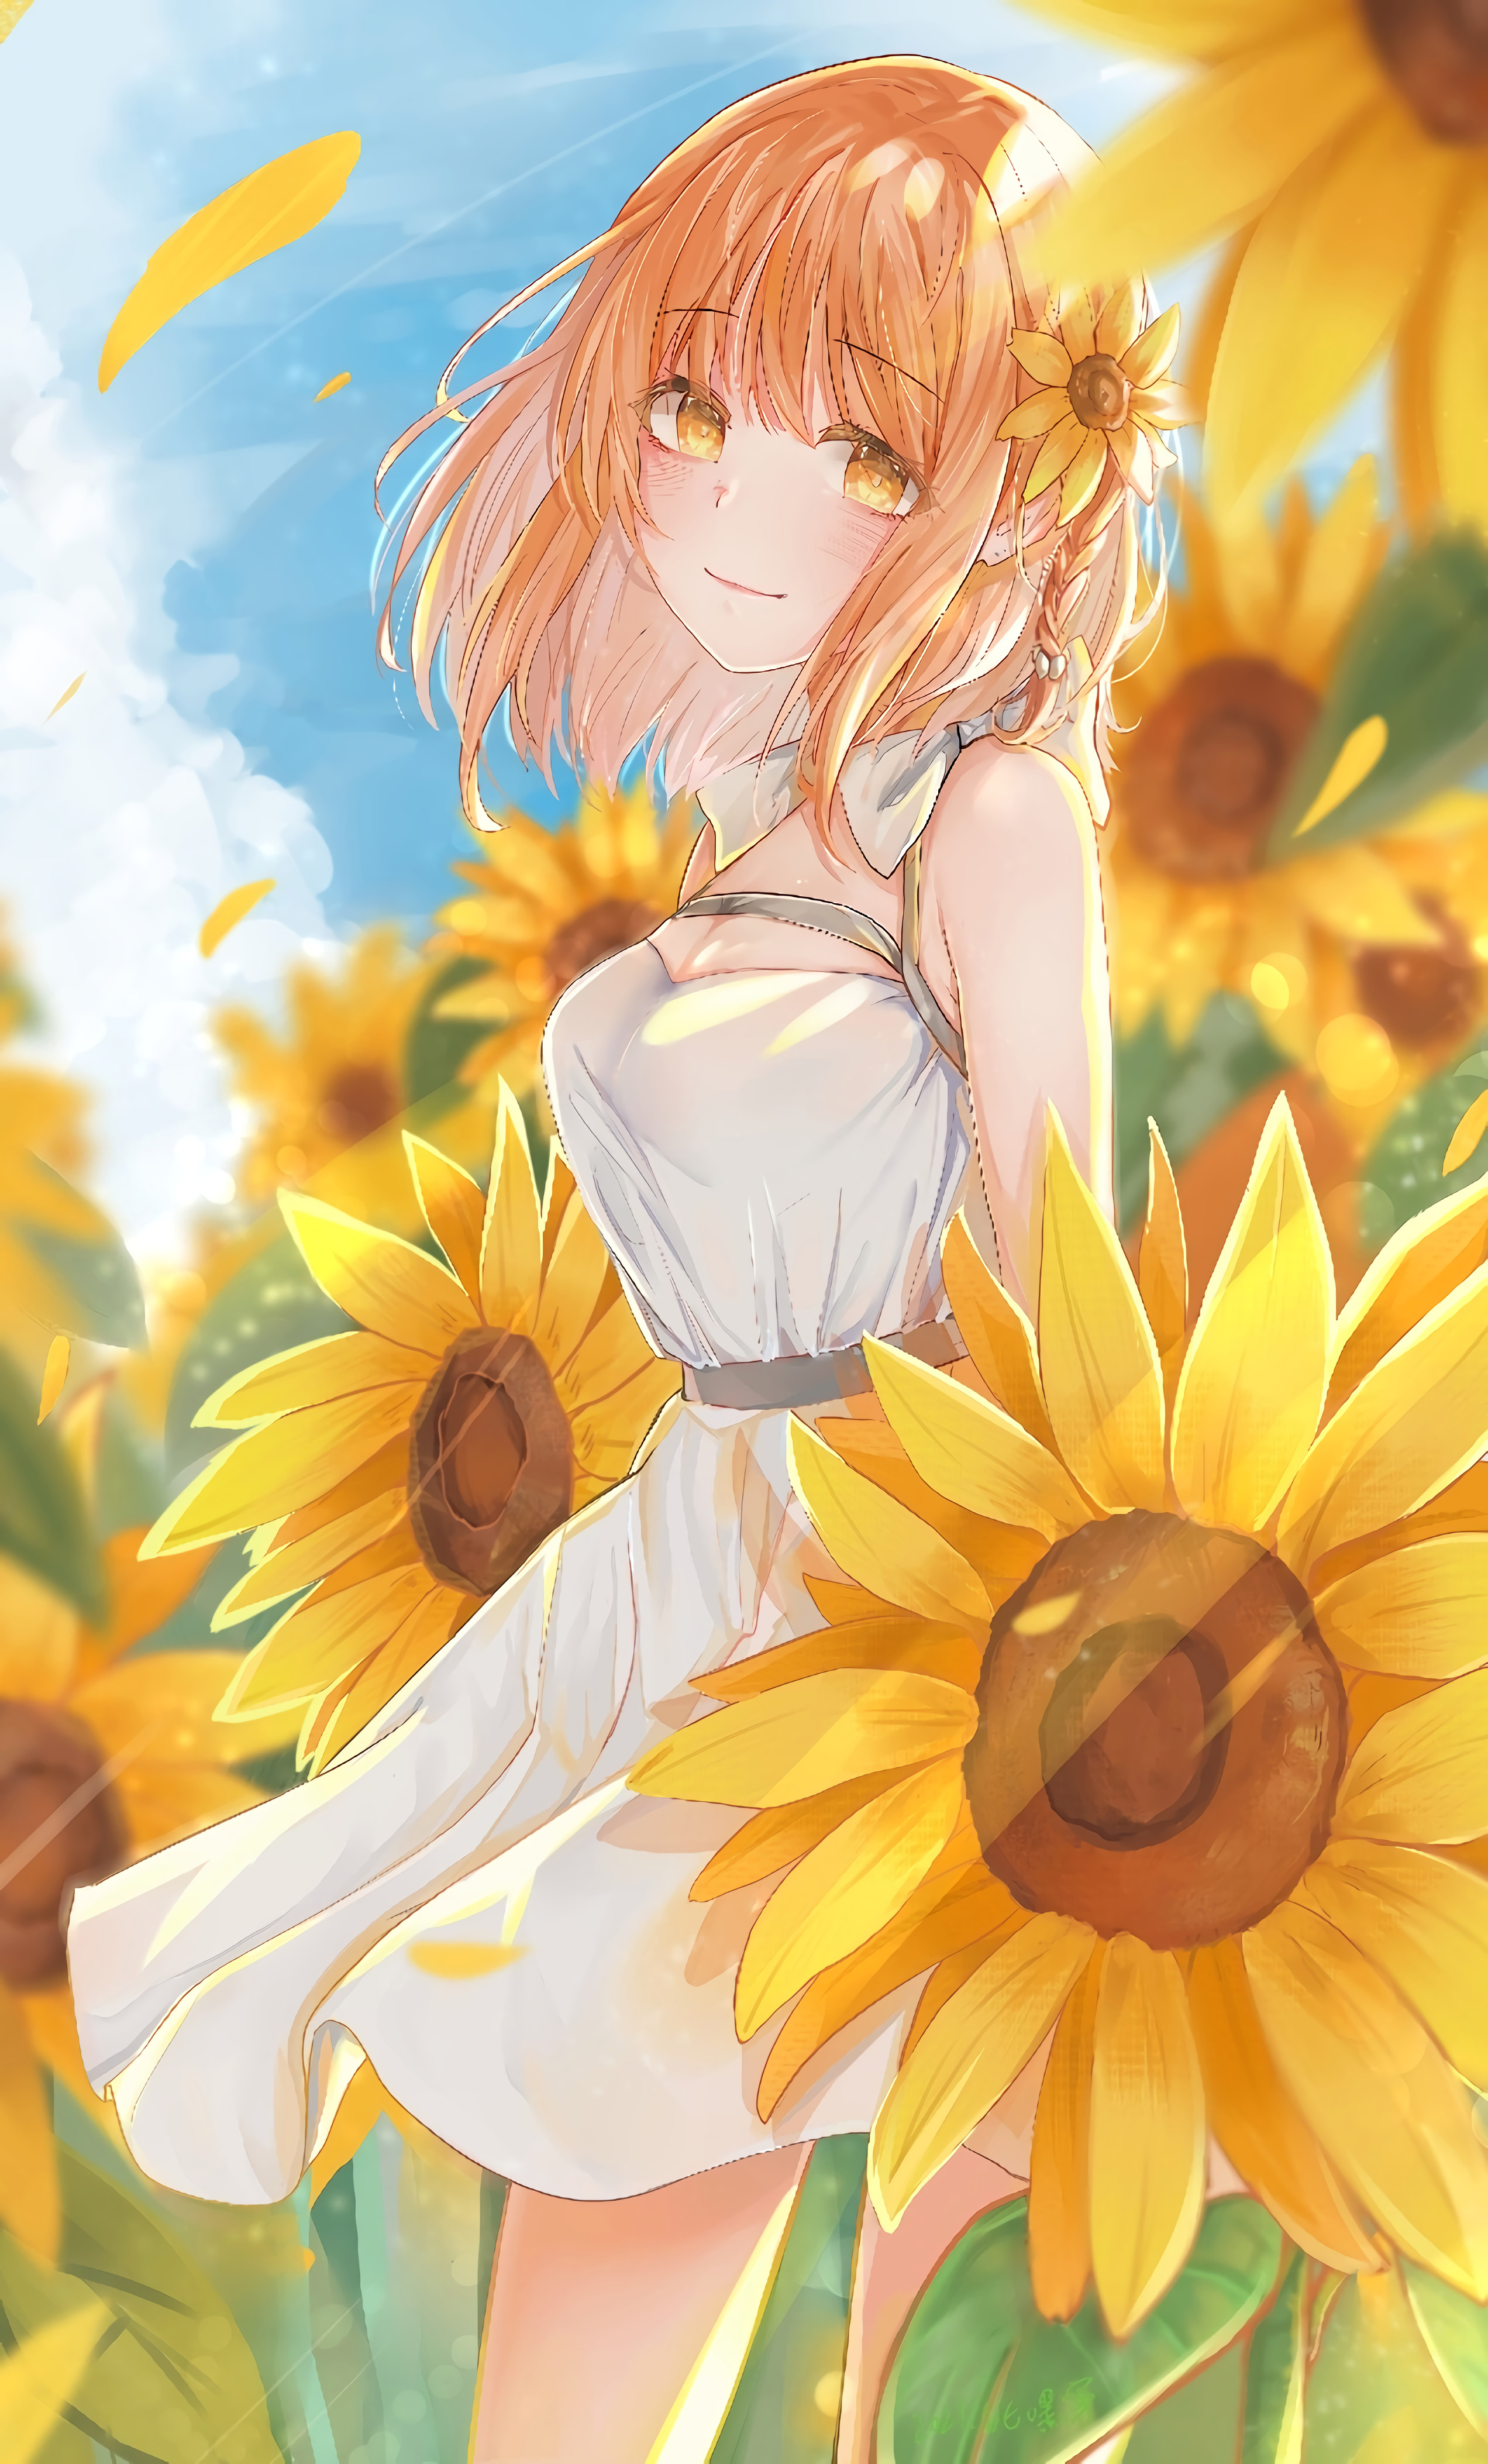 Girl Sunflowers Flowers Field Anime